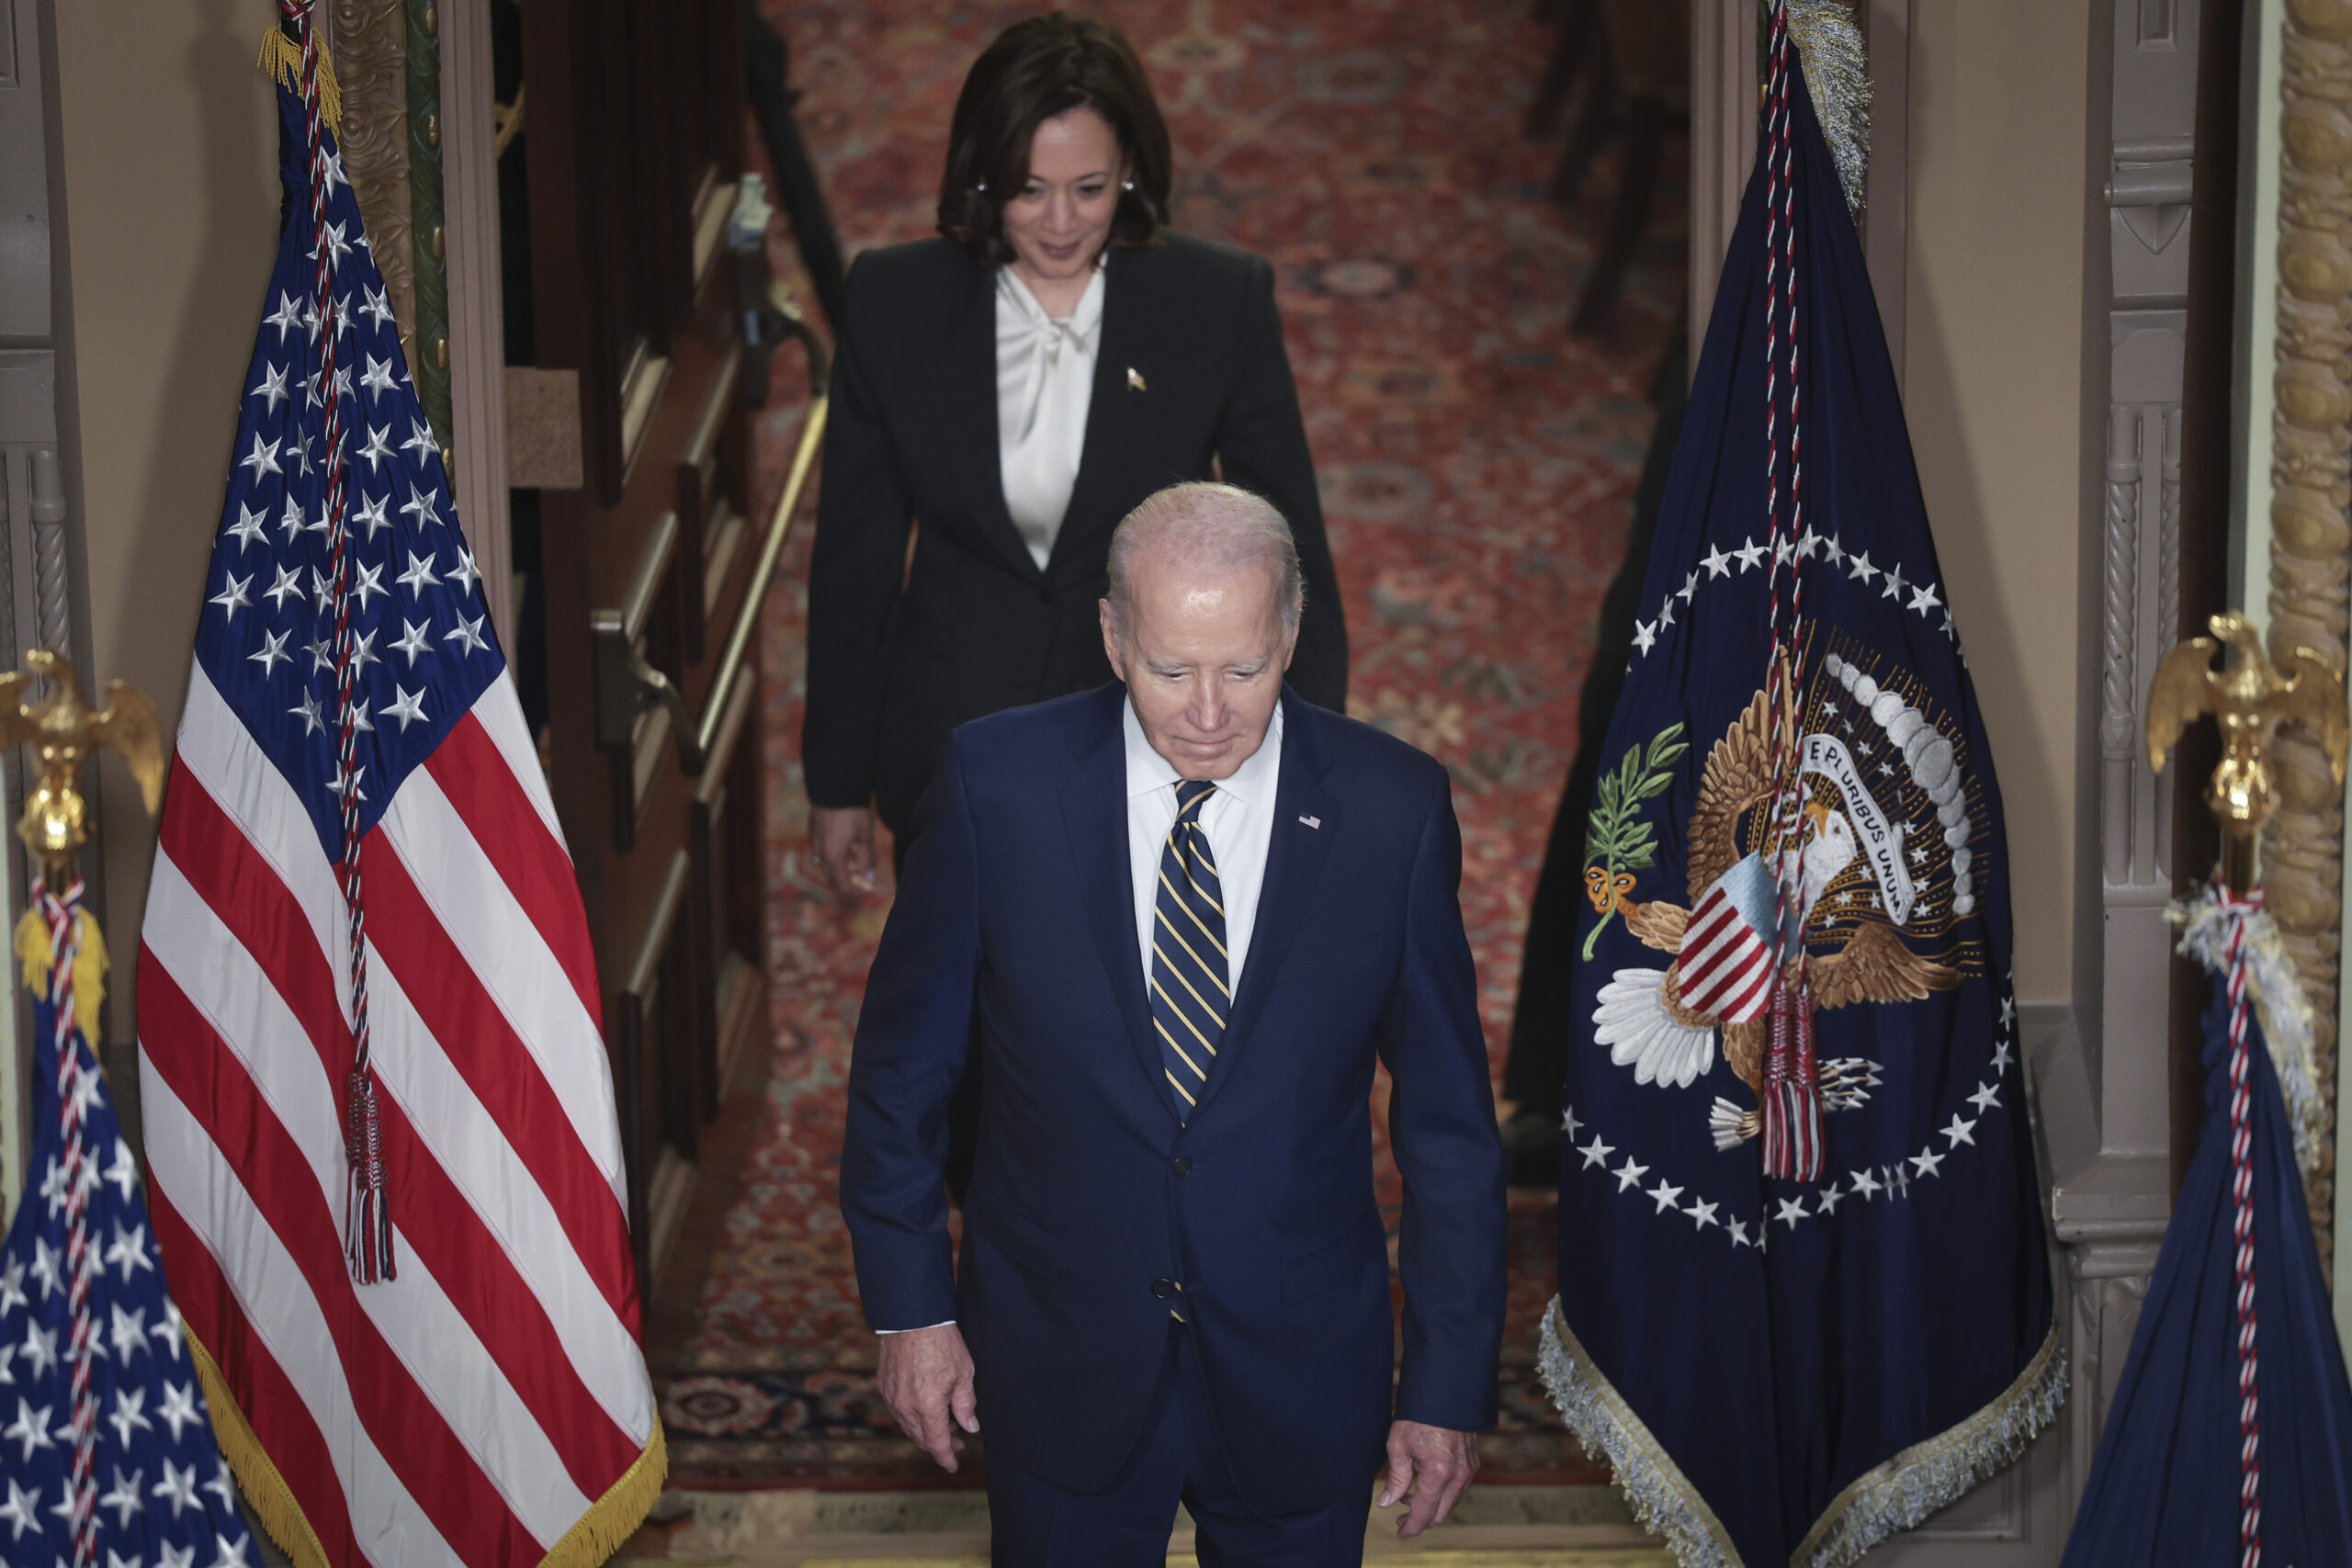 Columnists call for Biden to drop Harris, pick new running mate